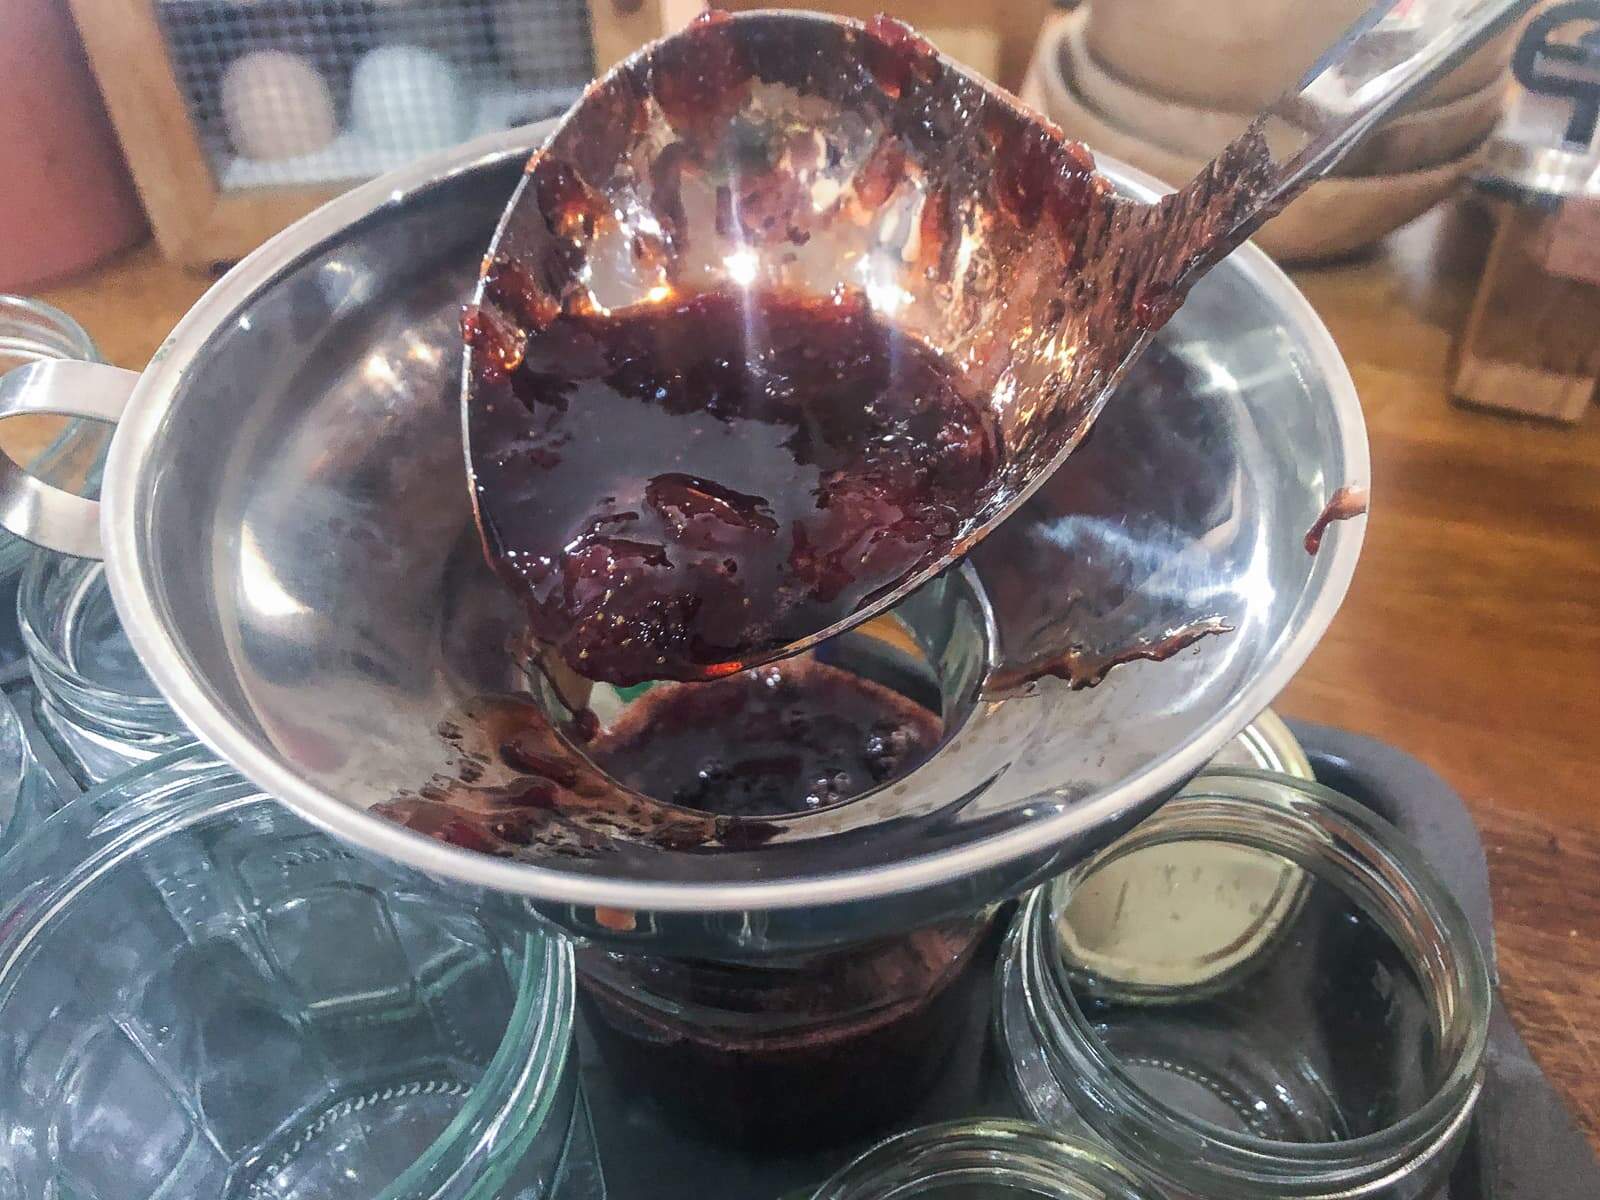 Decanting fresh homemade jam into sterilised jars.